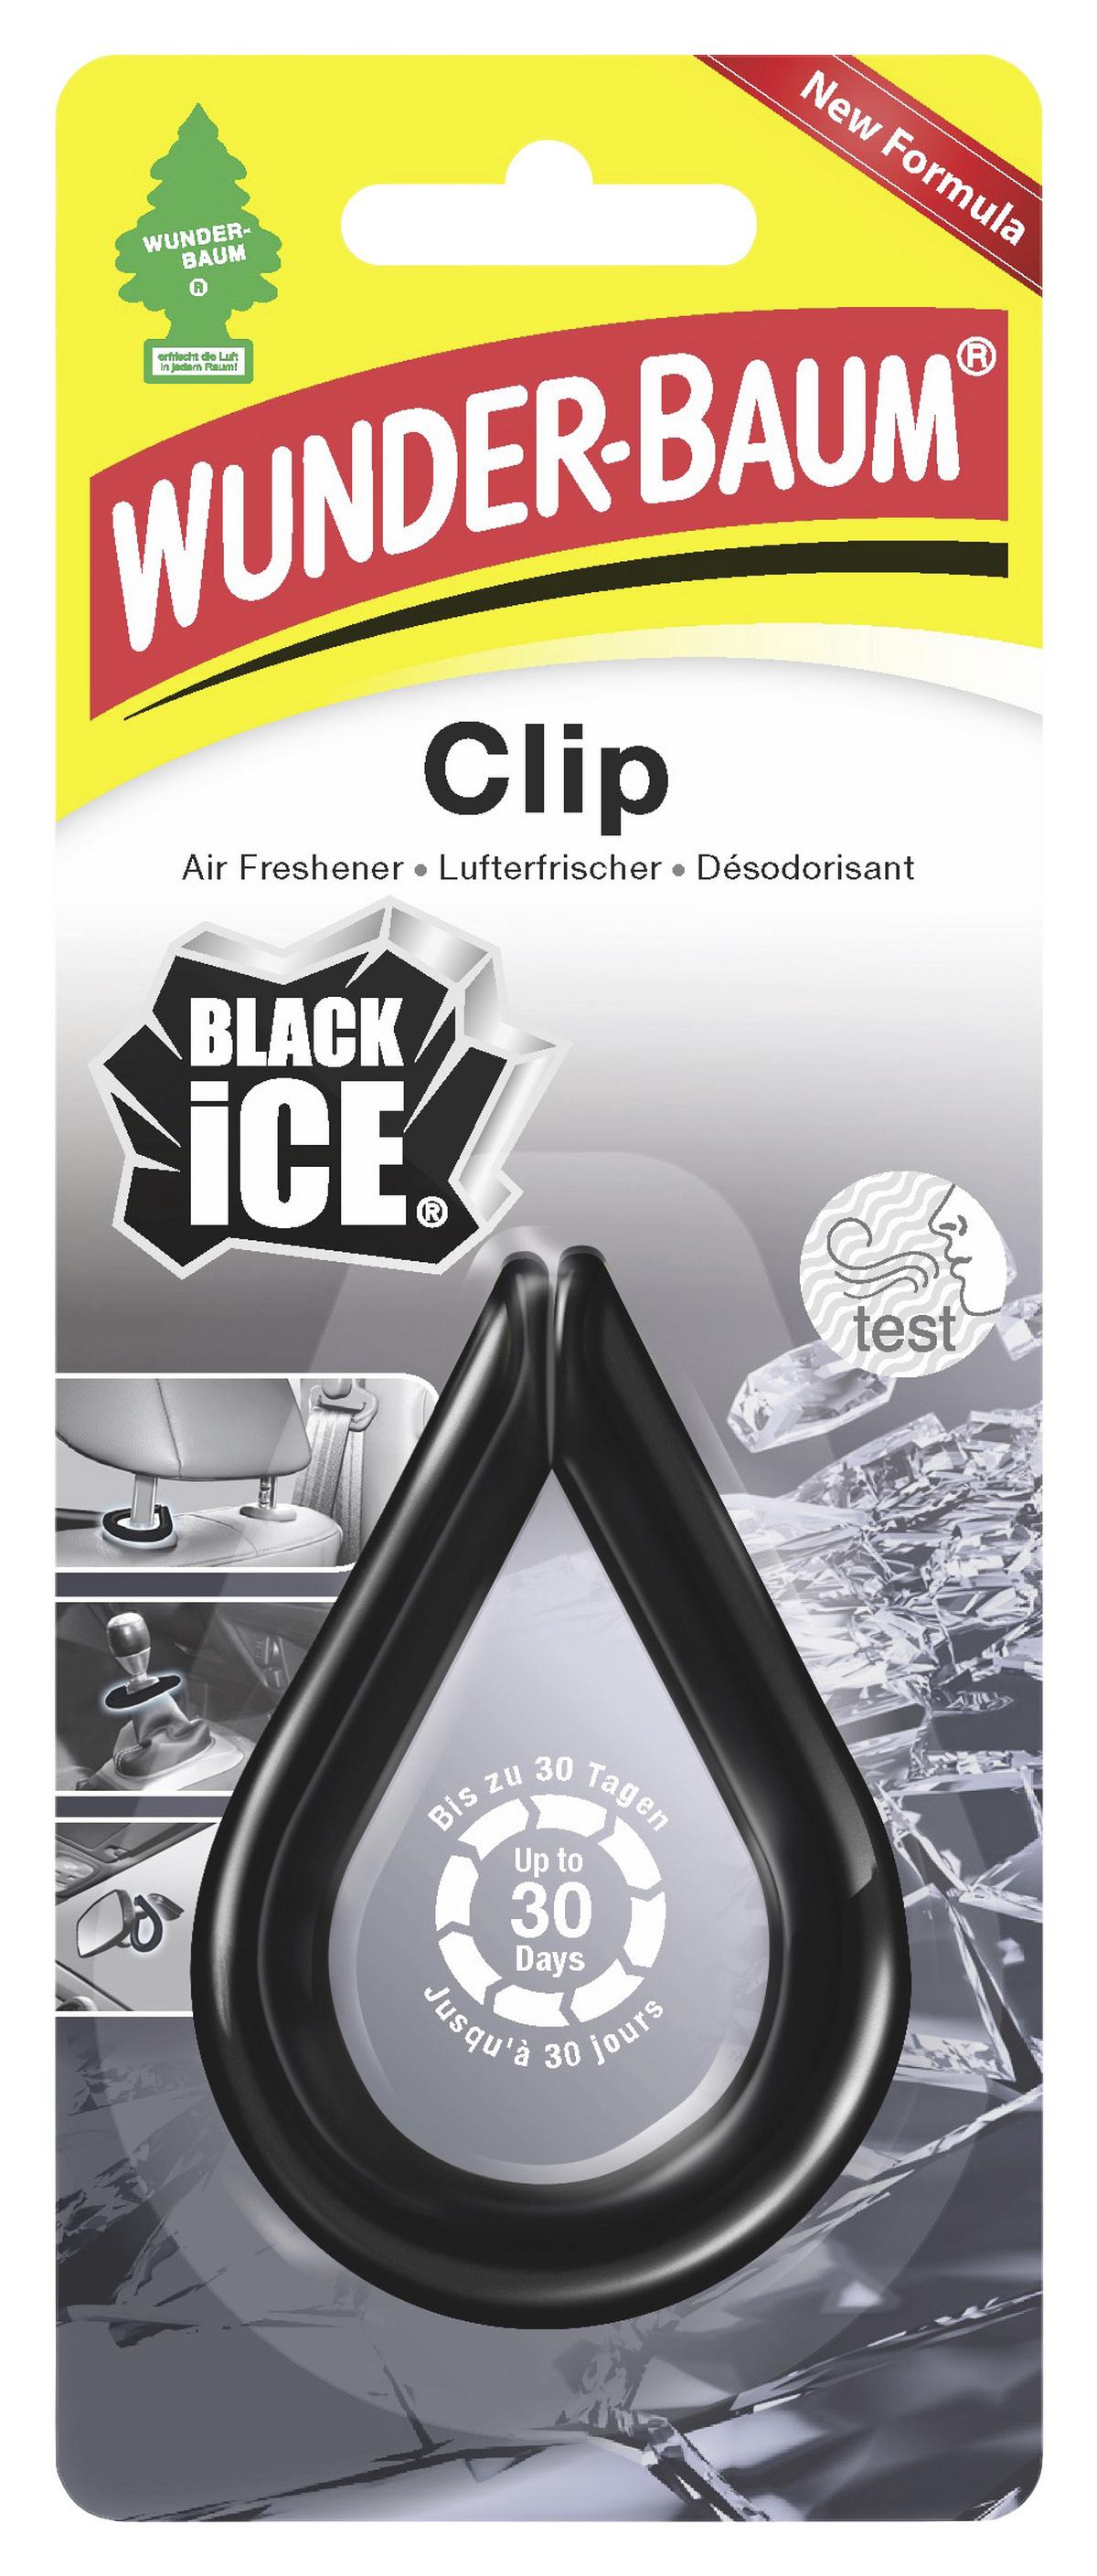 Wunderbaum Clip Black Ice Duft 1 Stk